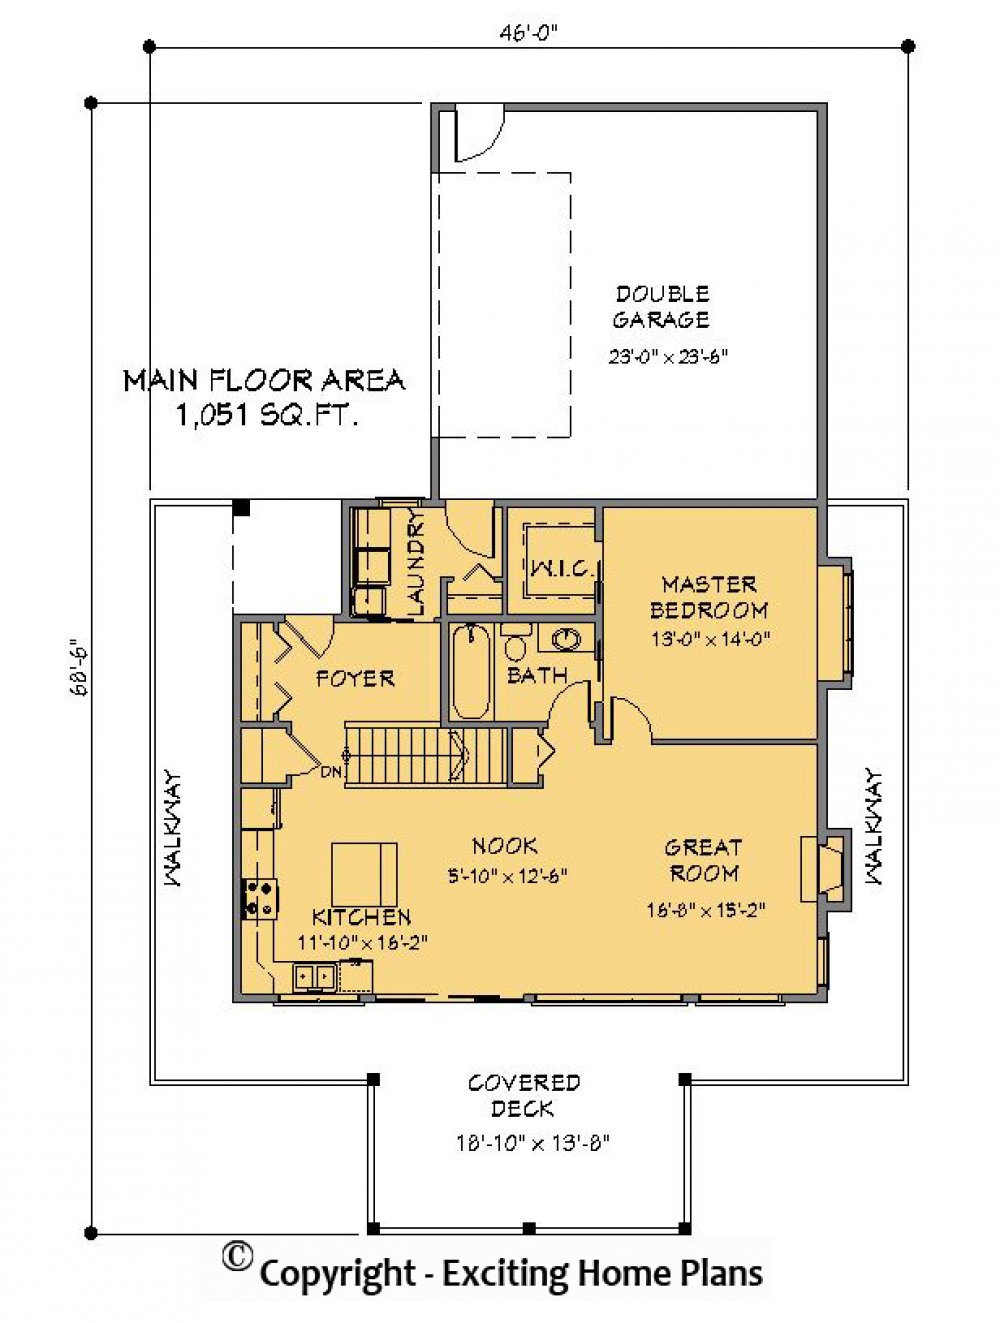 House Plan E1182-10  Main Floor Plan